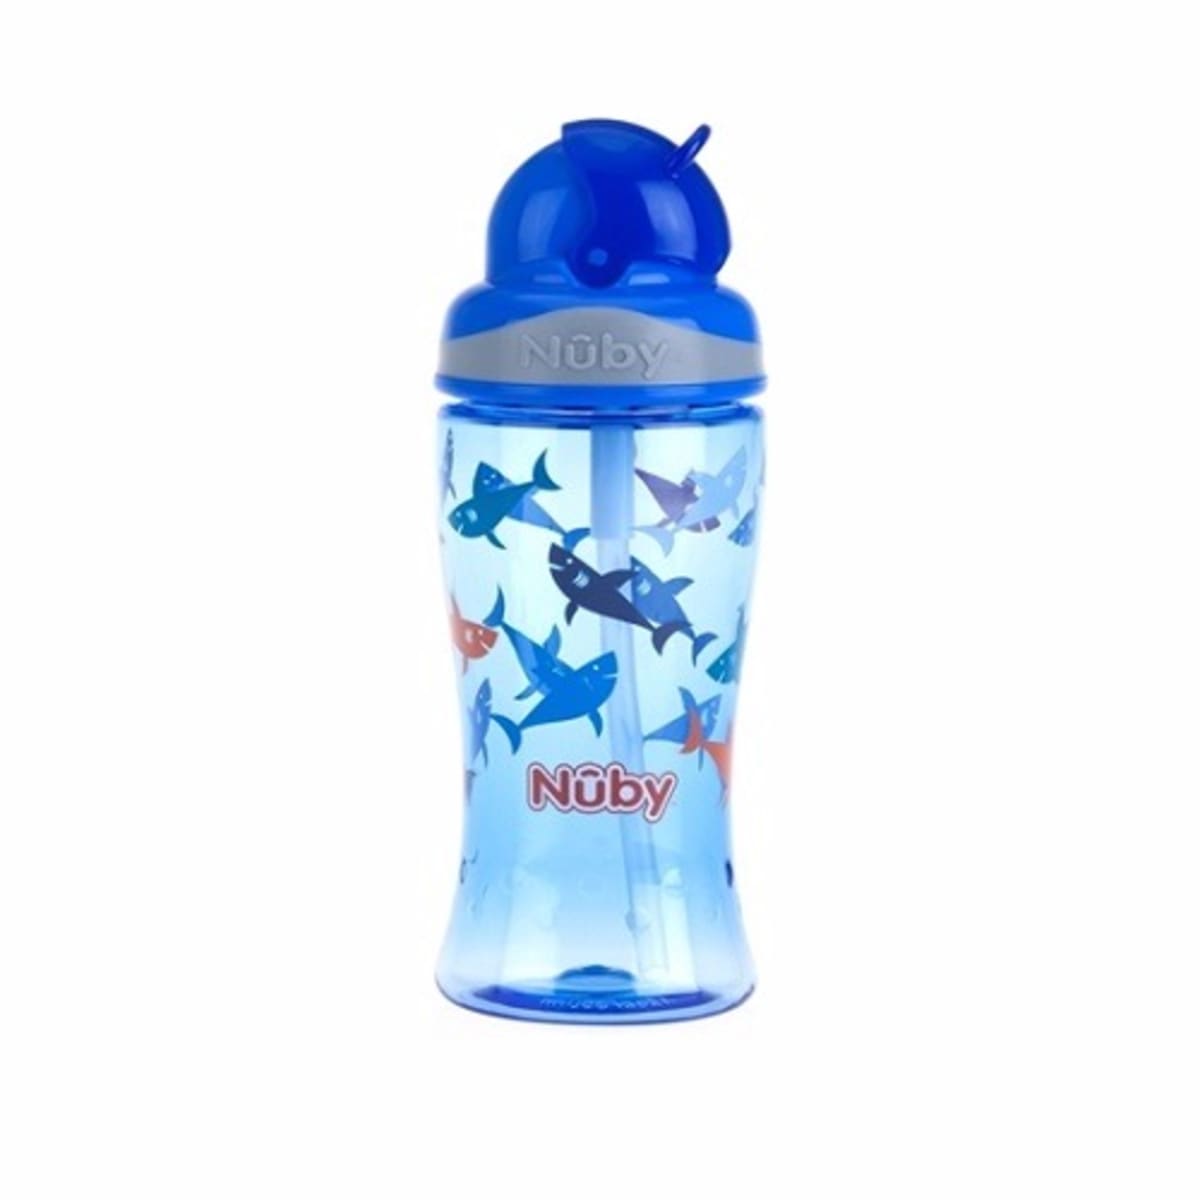 https://www-konga-com-res.cloudinary.com/w_400,f_auto,fl_lossy,dpr_3.0,q_auto/media/catalog/product/T/h/Thirsty-Kids-Water-Bottle-7580777.jpg